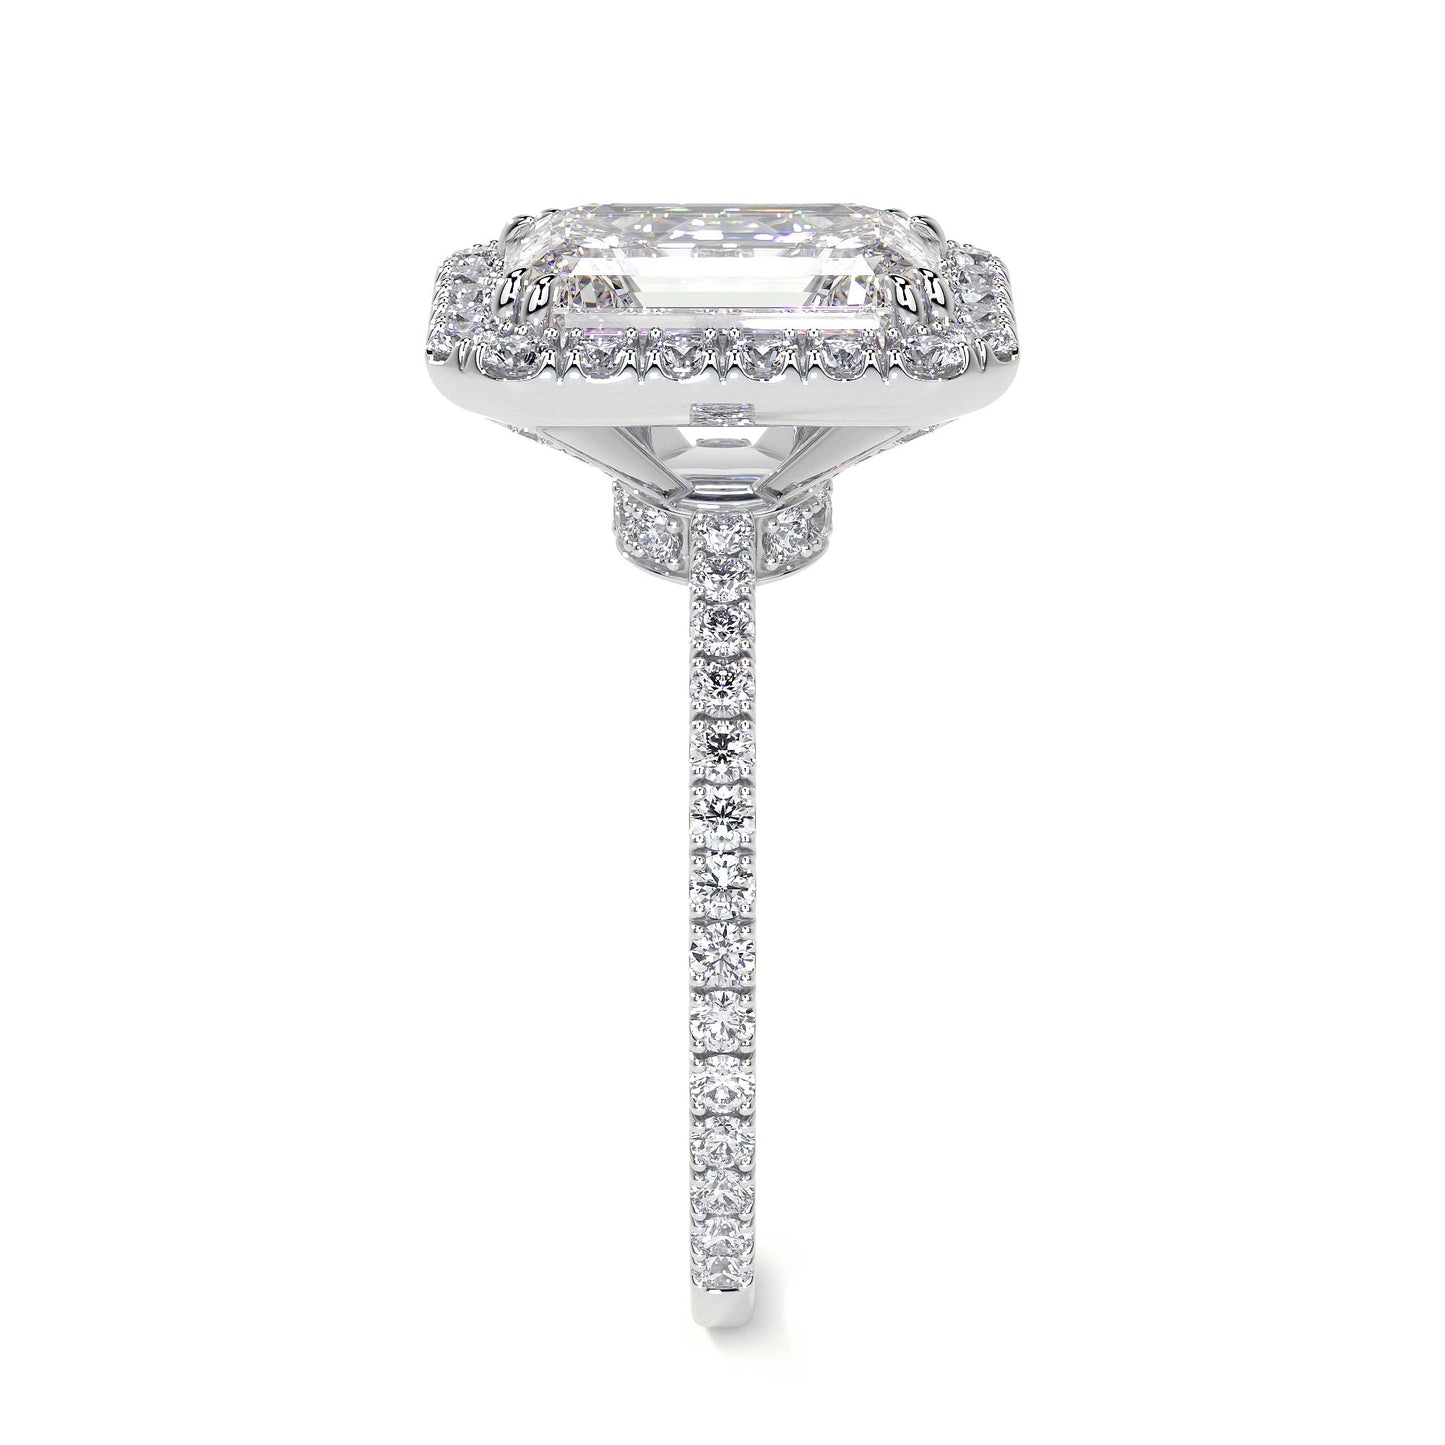 Emerald Cut Diamond Ring With Halo, 2 CT